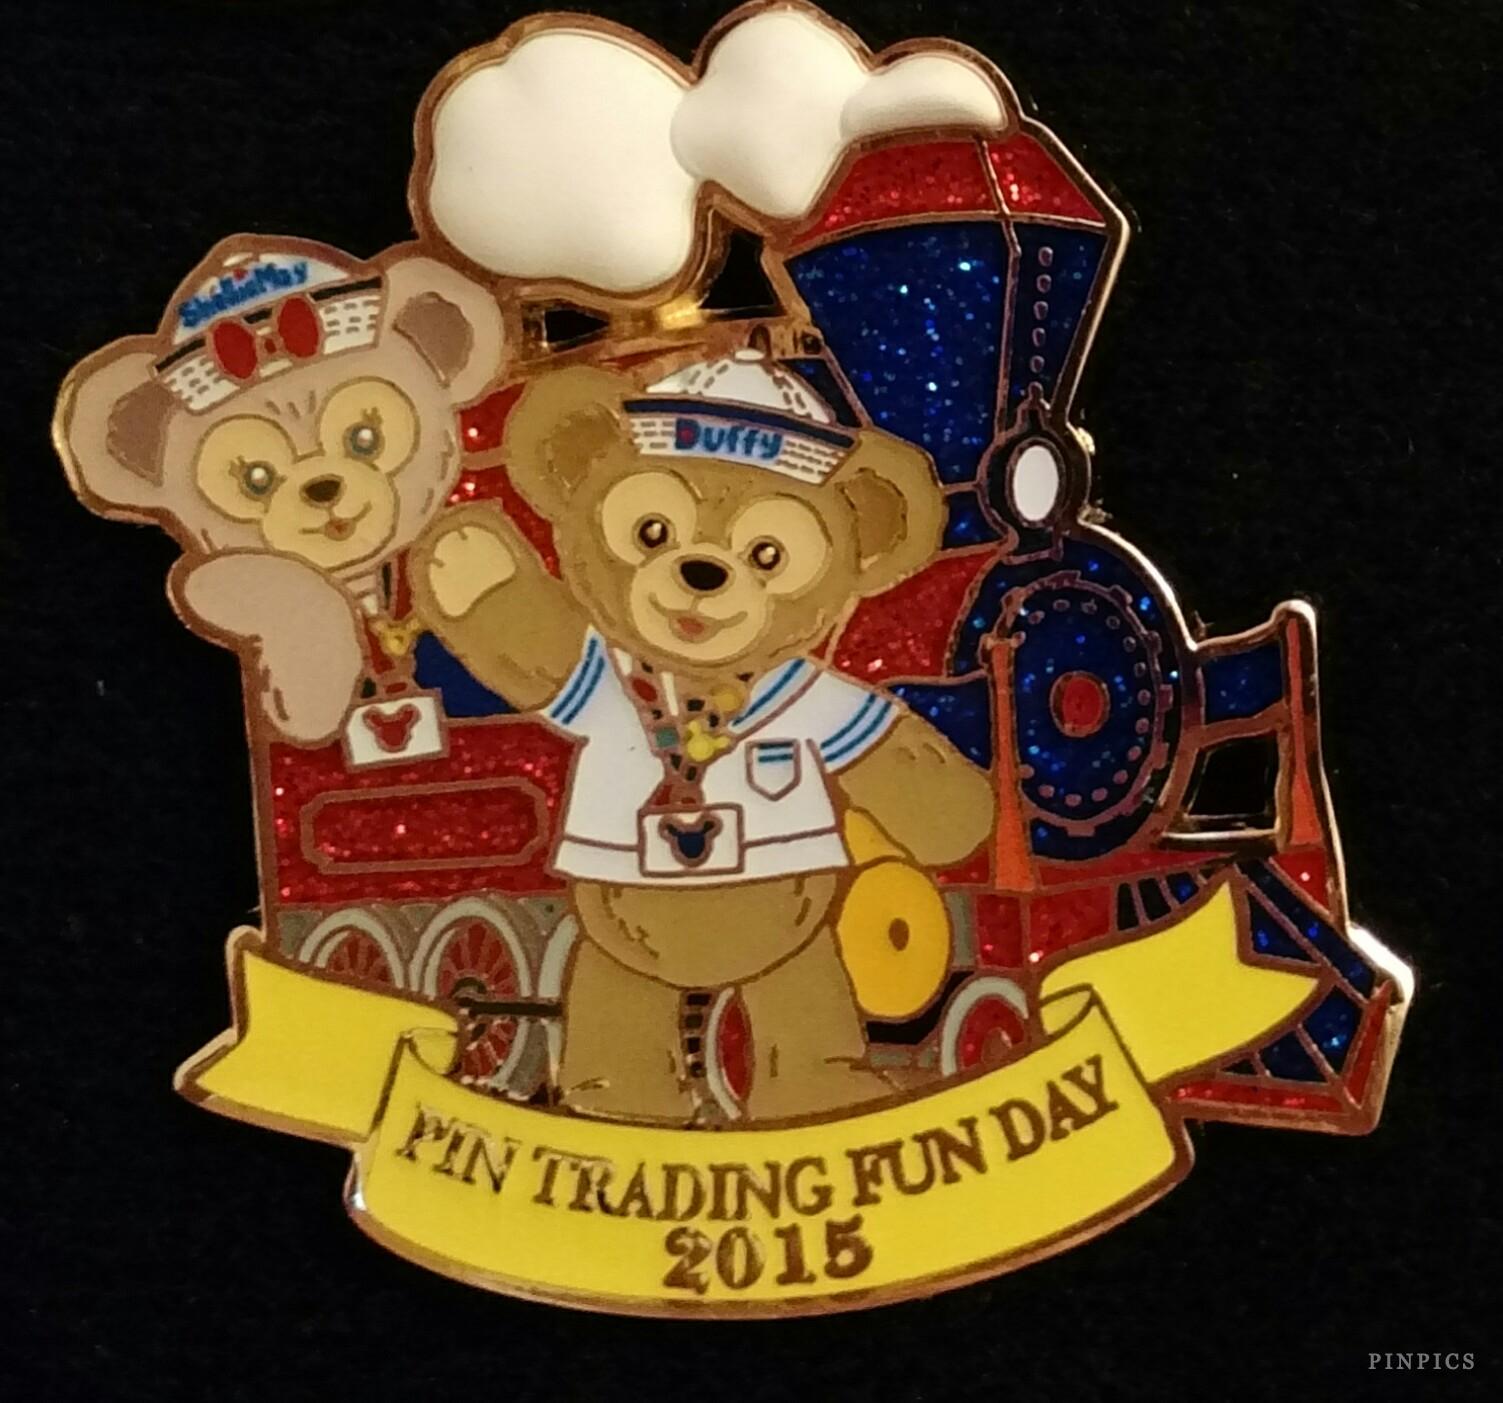 HKDL - Pin Trading Fun Days 2015 - Duffy & ShellieMay Railroad